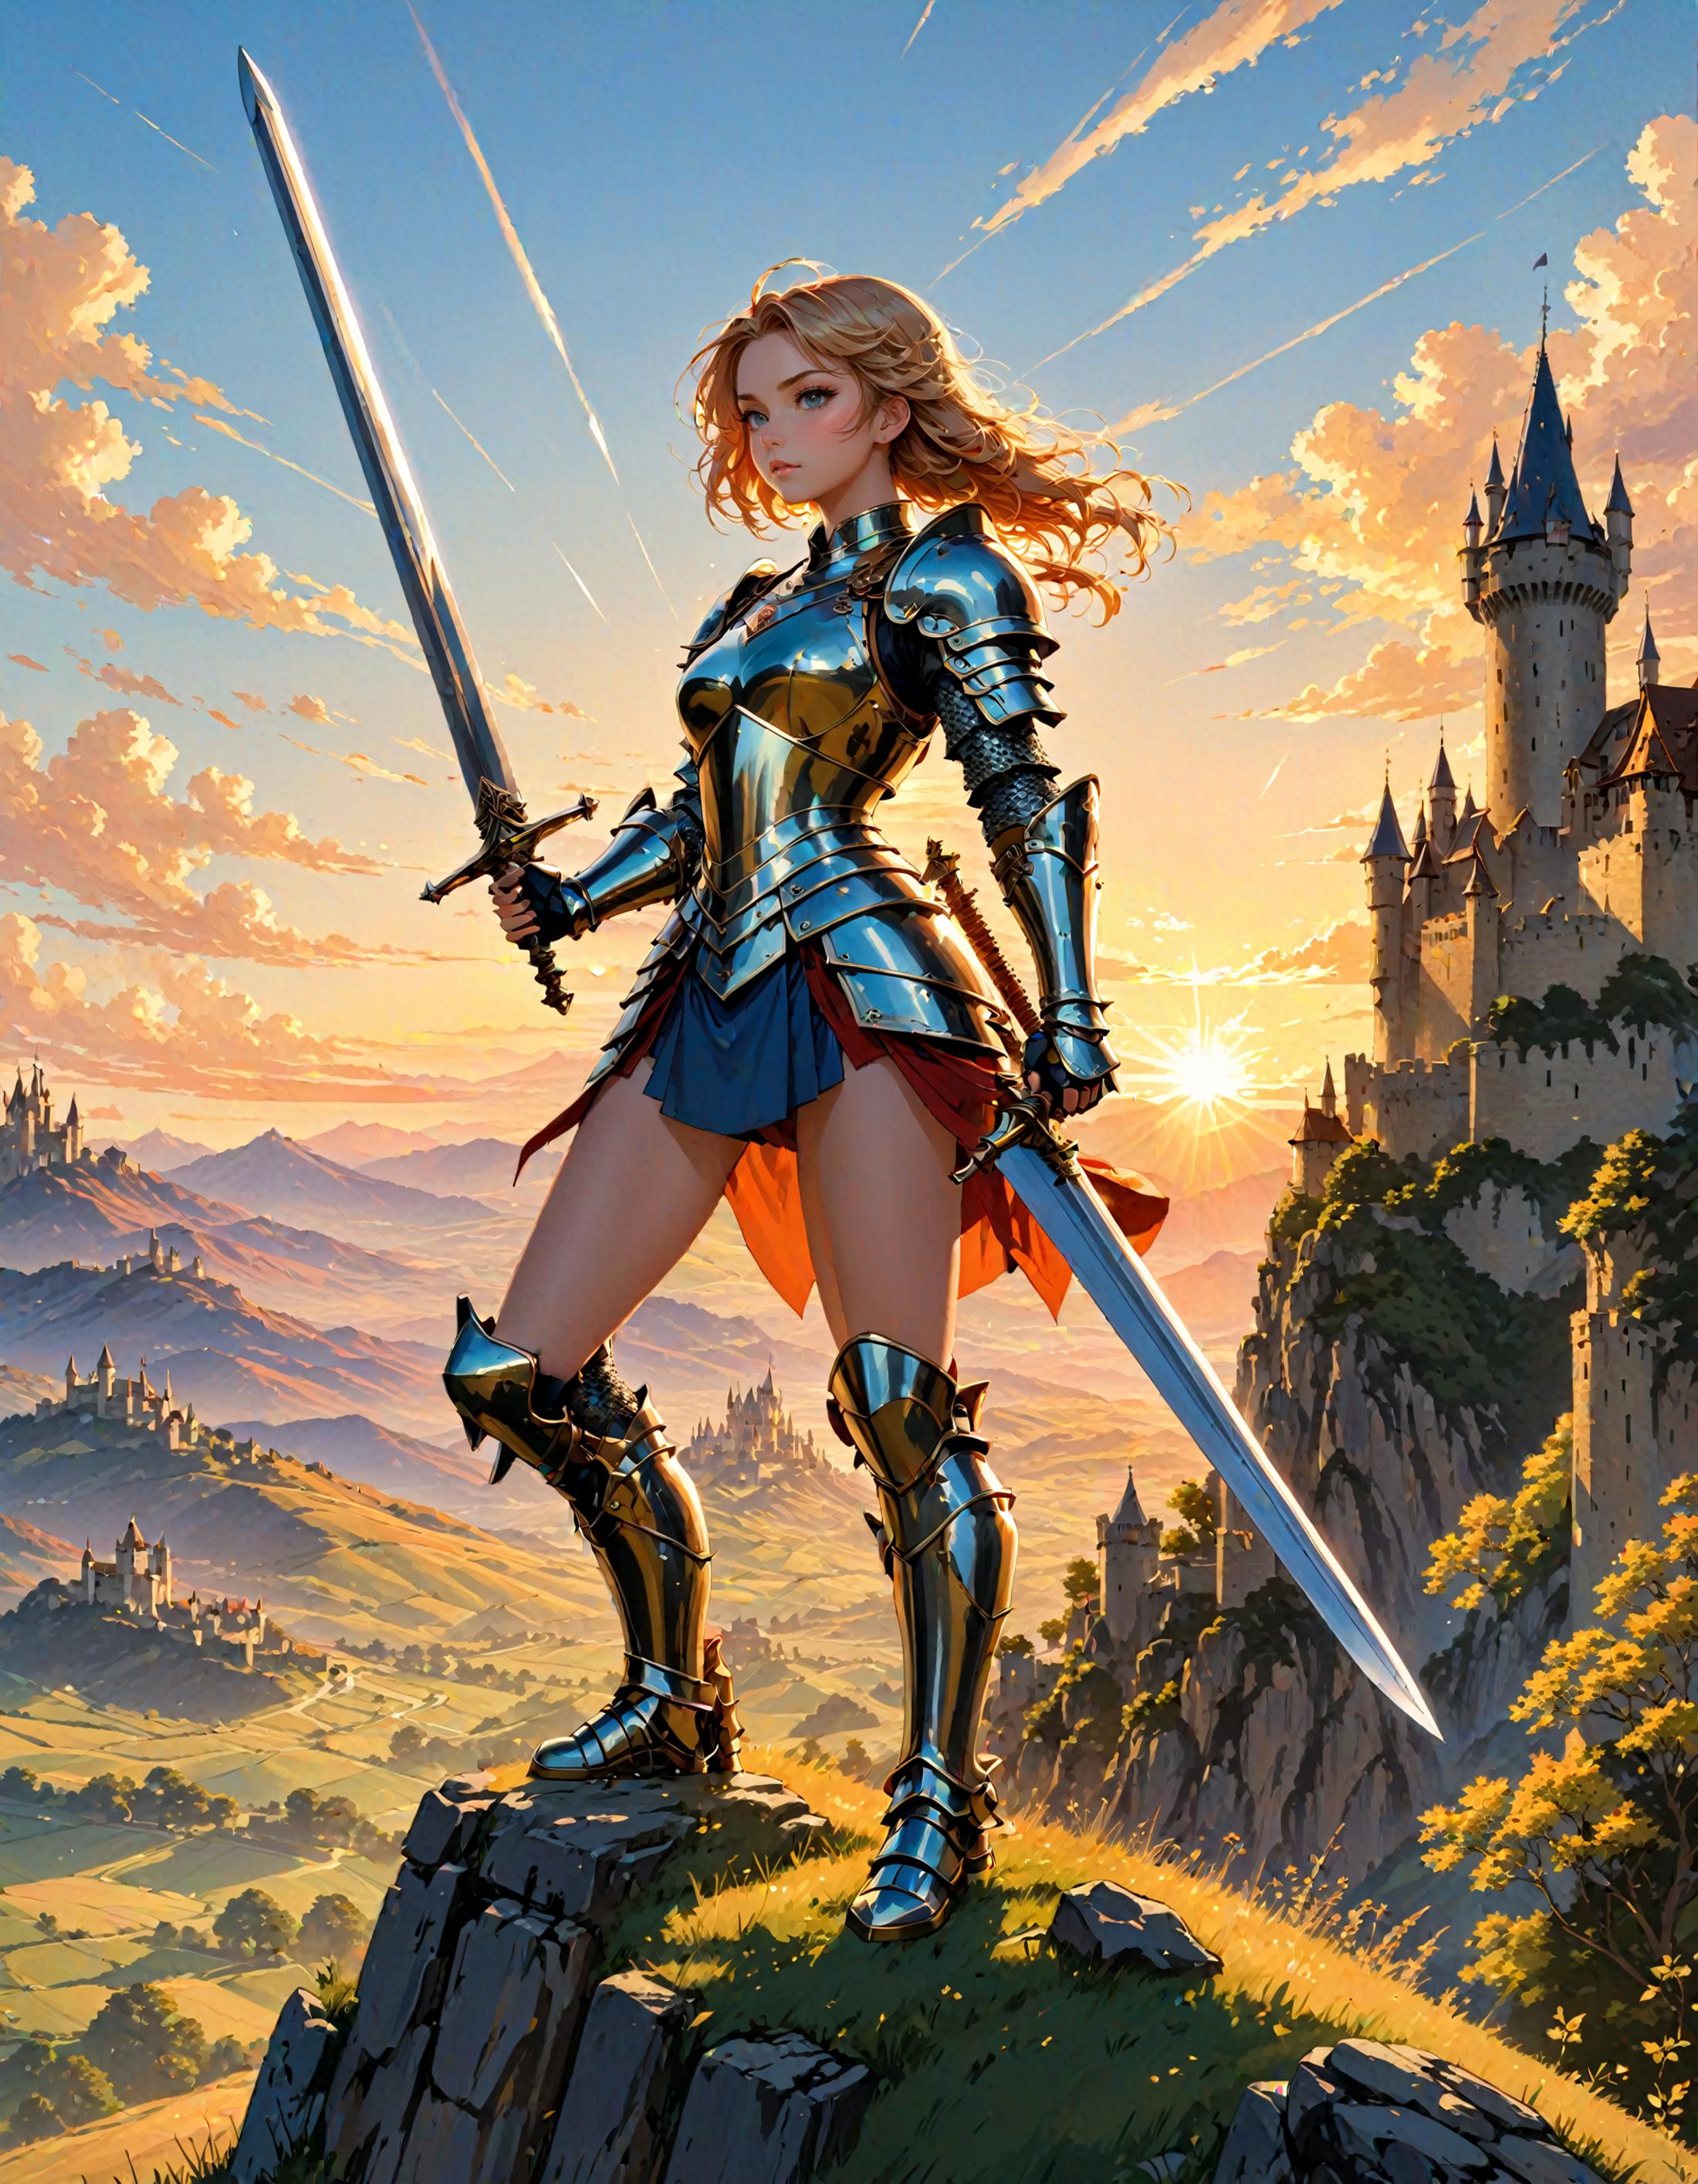 A Warrior Woman in a Fantasy Art Illustration